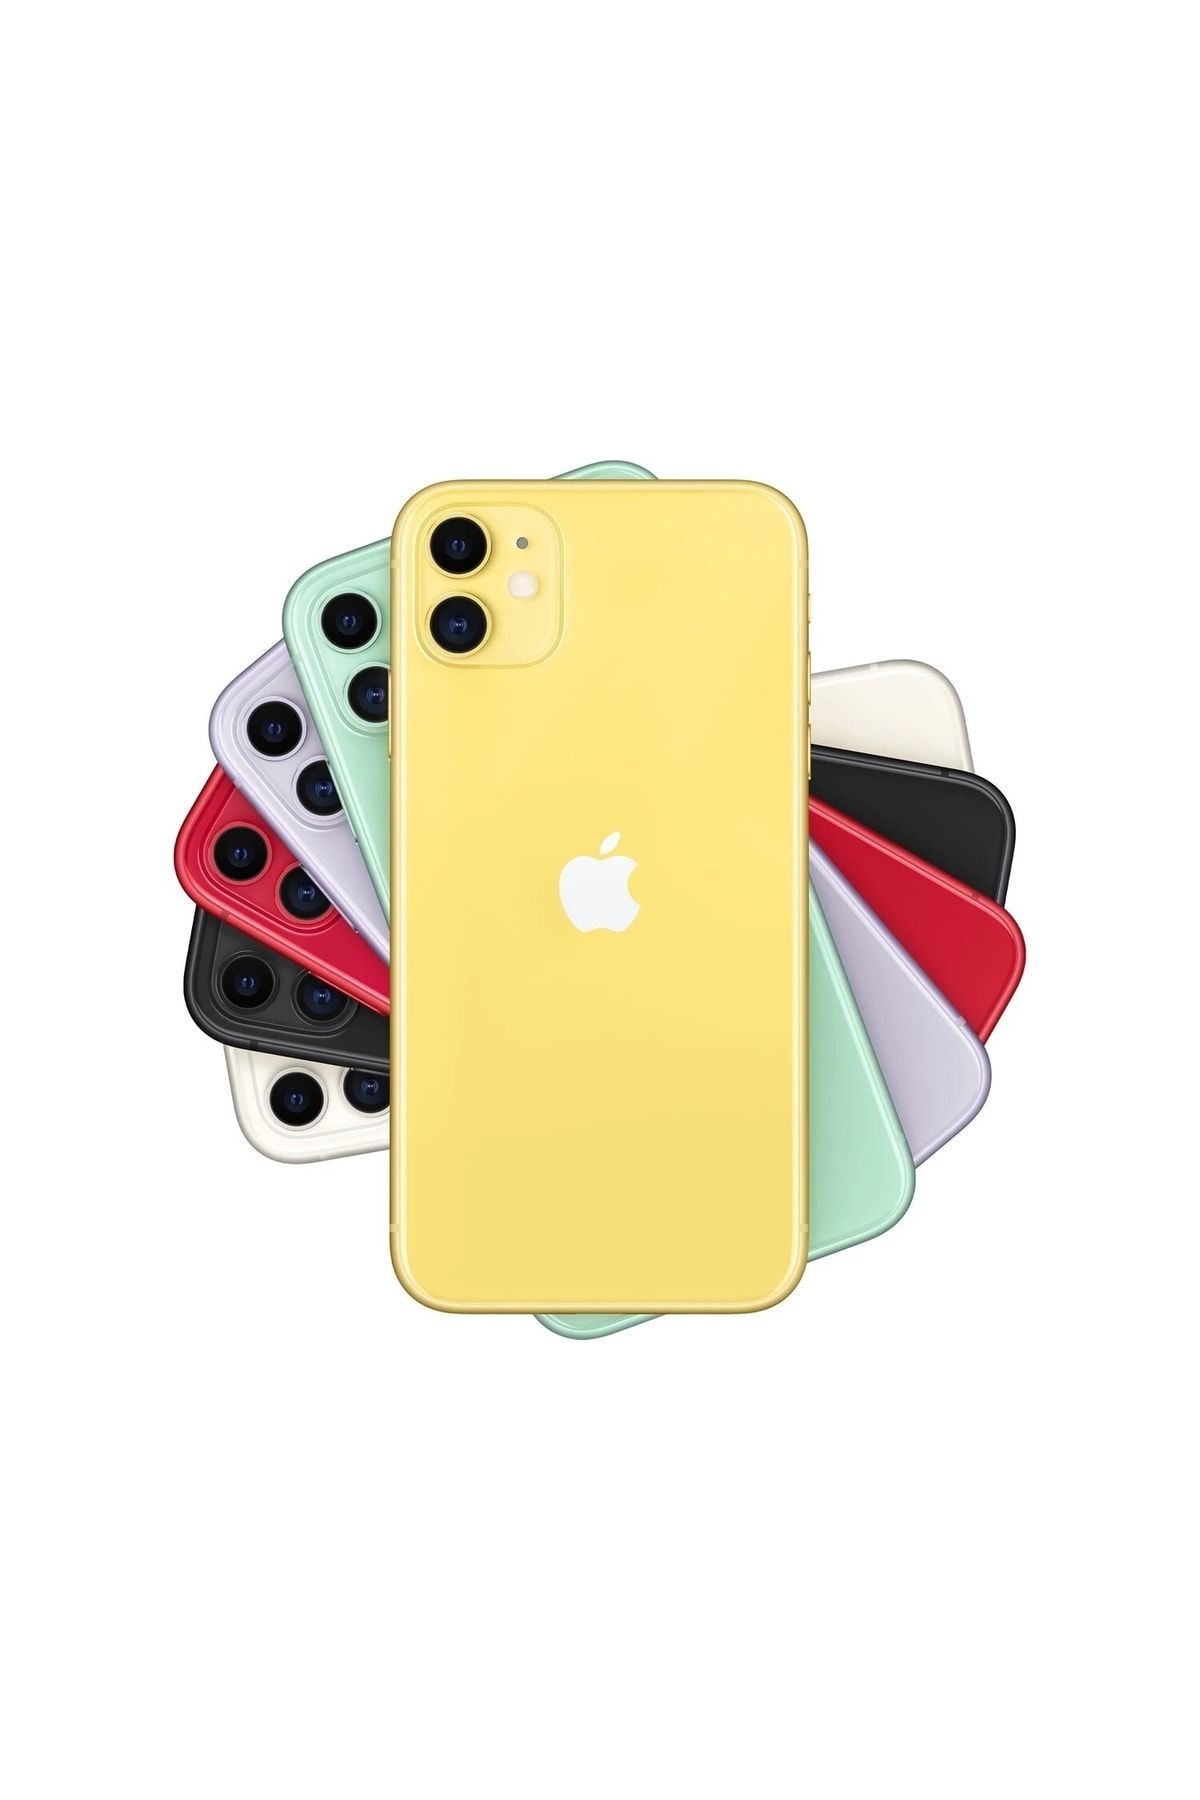 Apple Yenilenmiş iPhone 11 128 GB A Grade